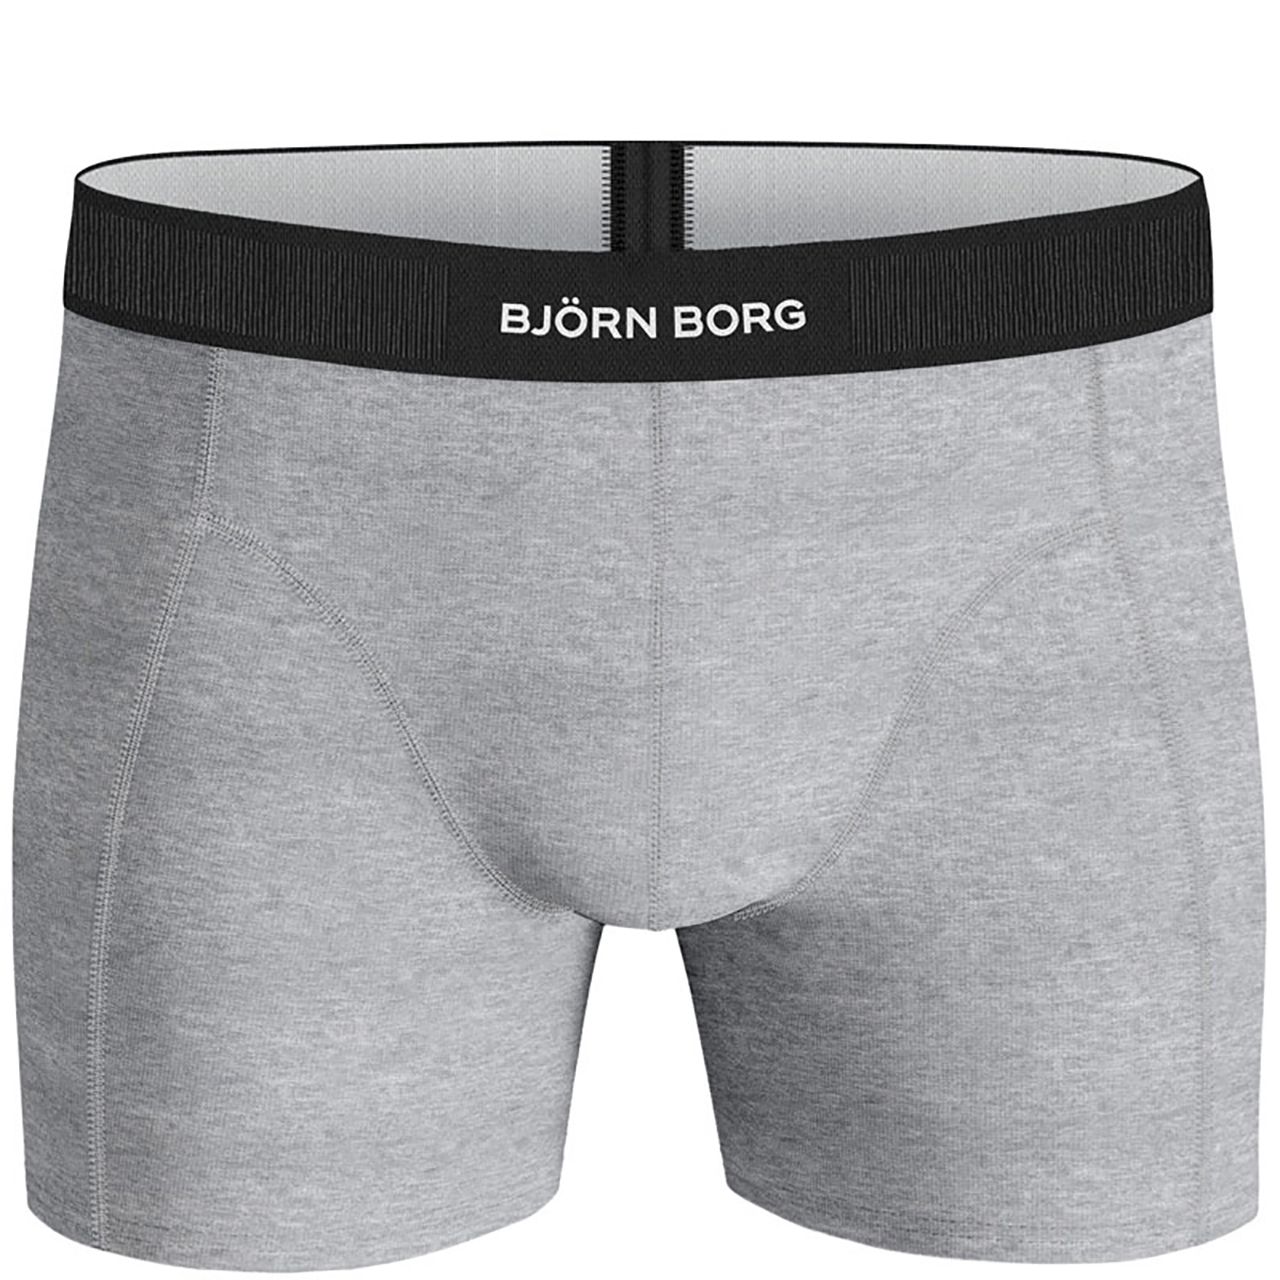 Björn Borg Boxershort 2-pack Grijs 070205-001-L